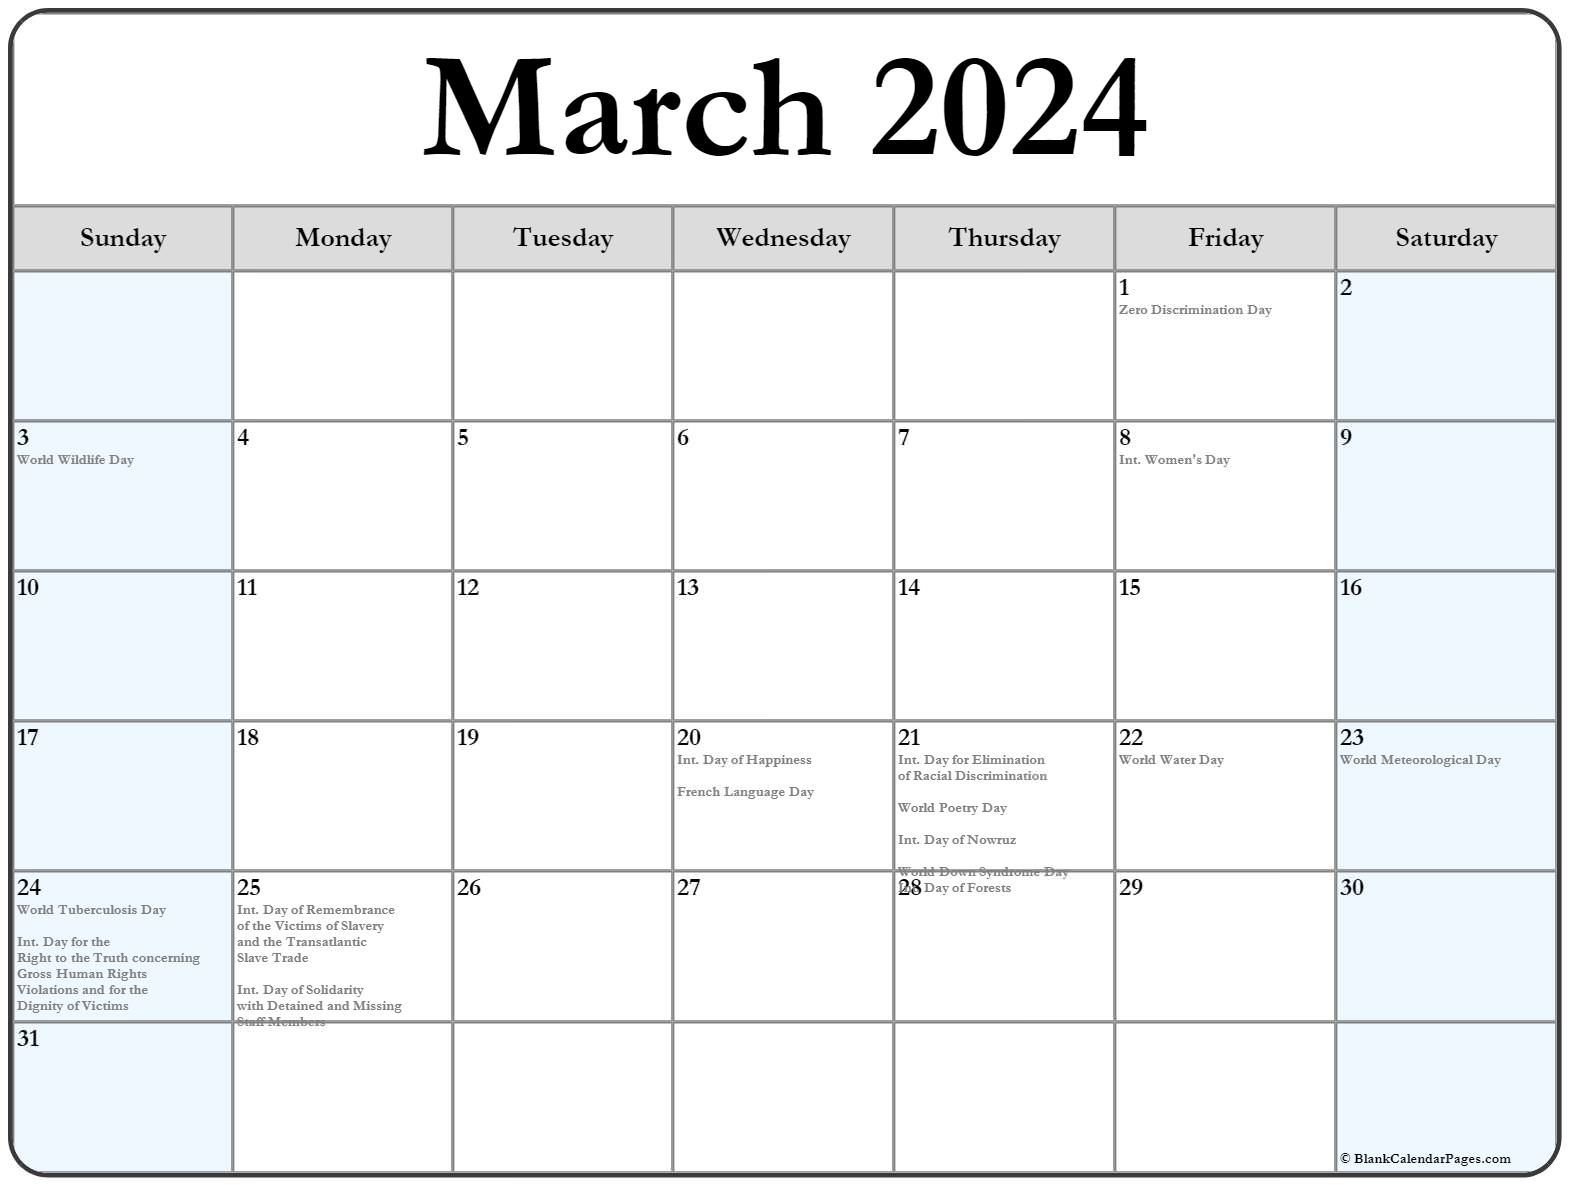 March 2024 Calendar Wiki New Amazing Incredible School Calendar Dates